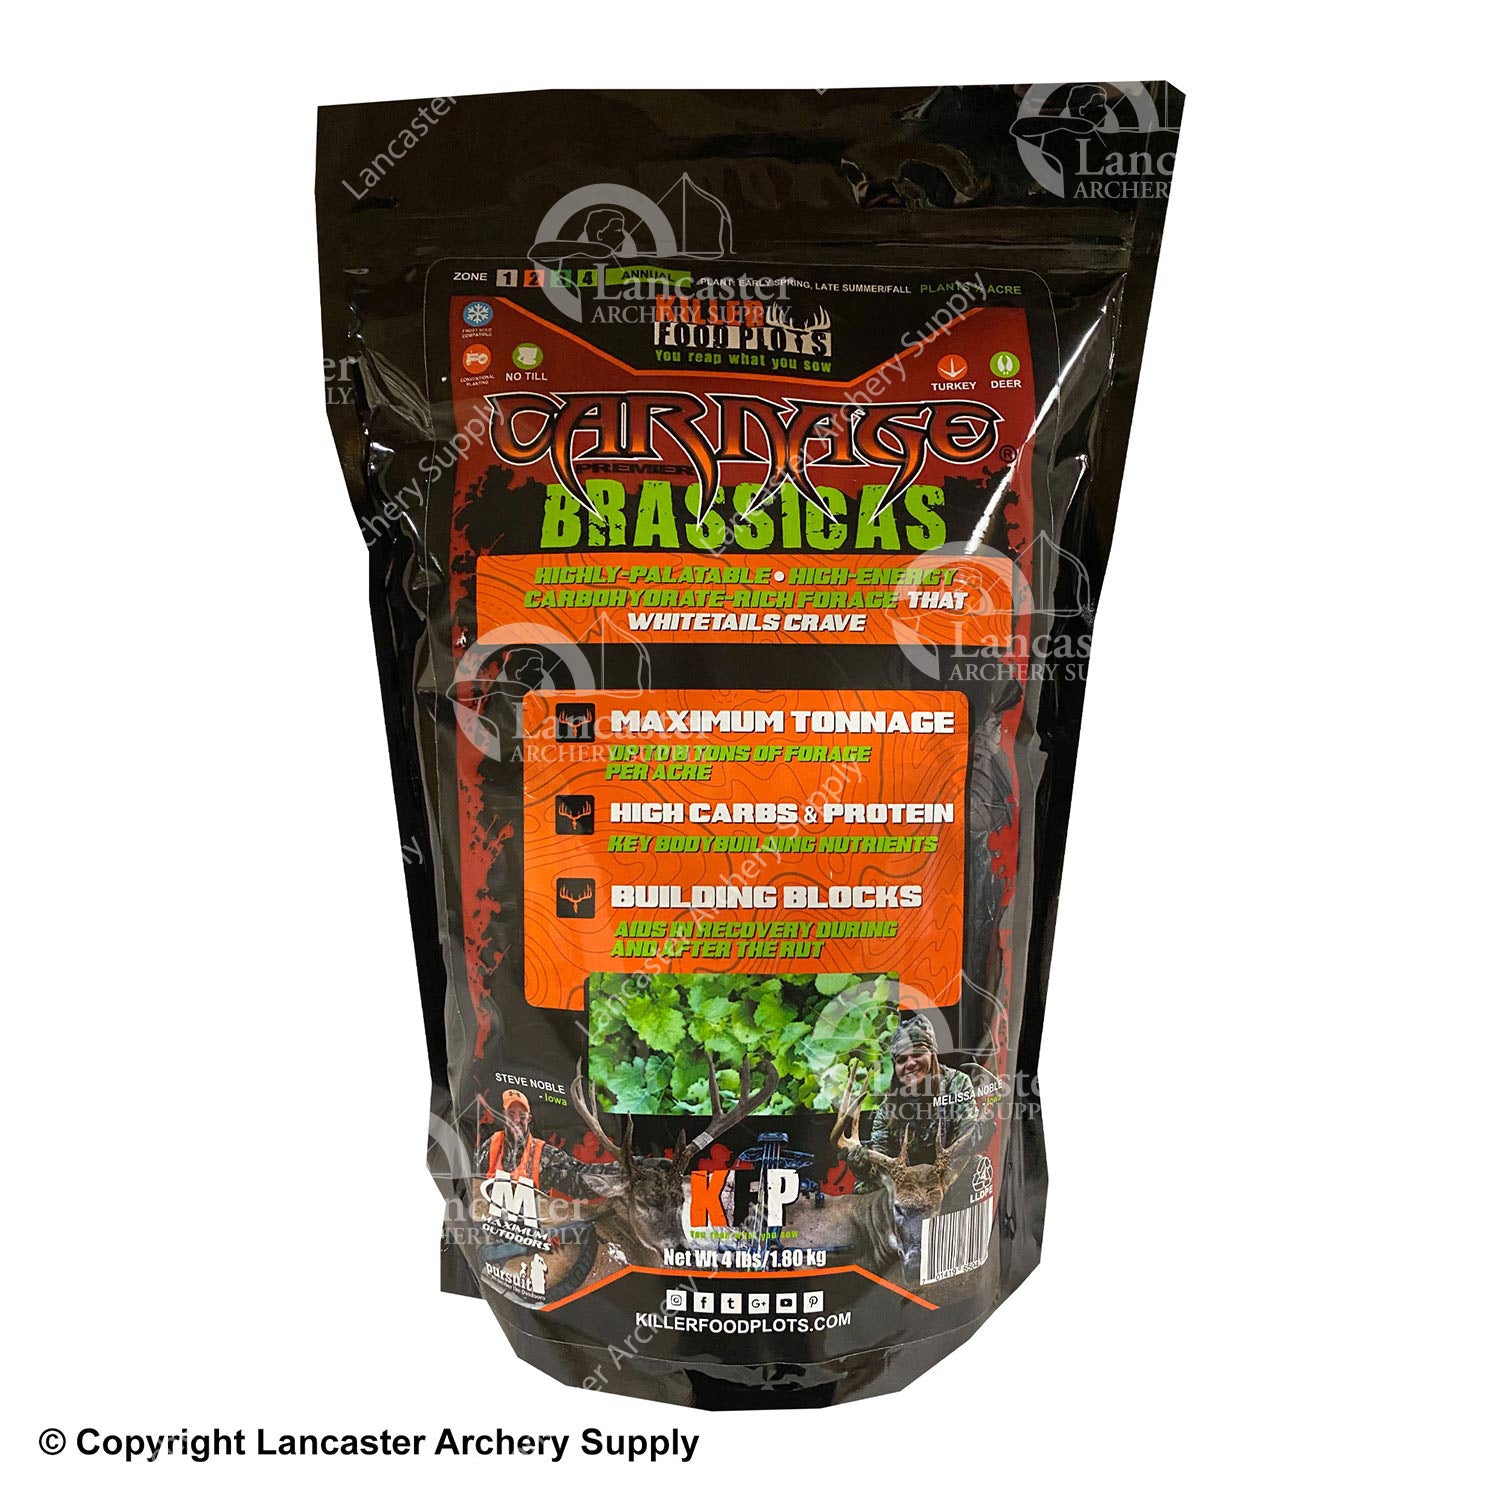 Killer Food Plots Carnage Brassicas Seed 4lb